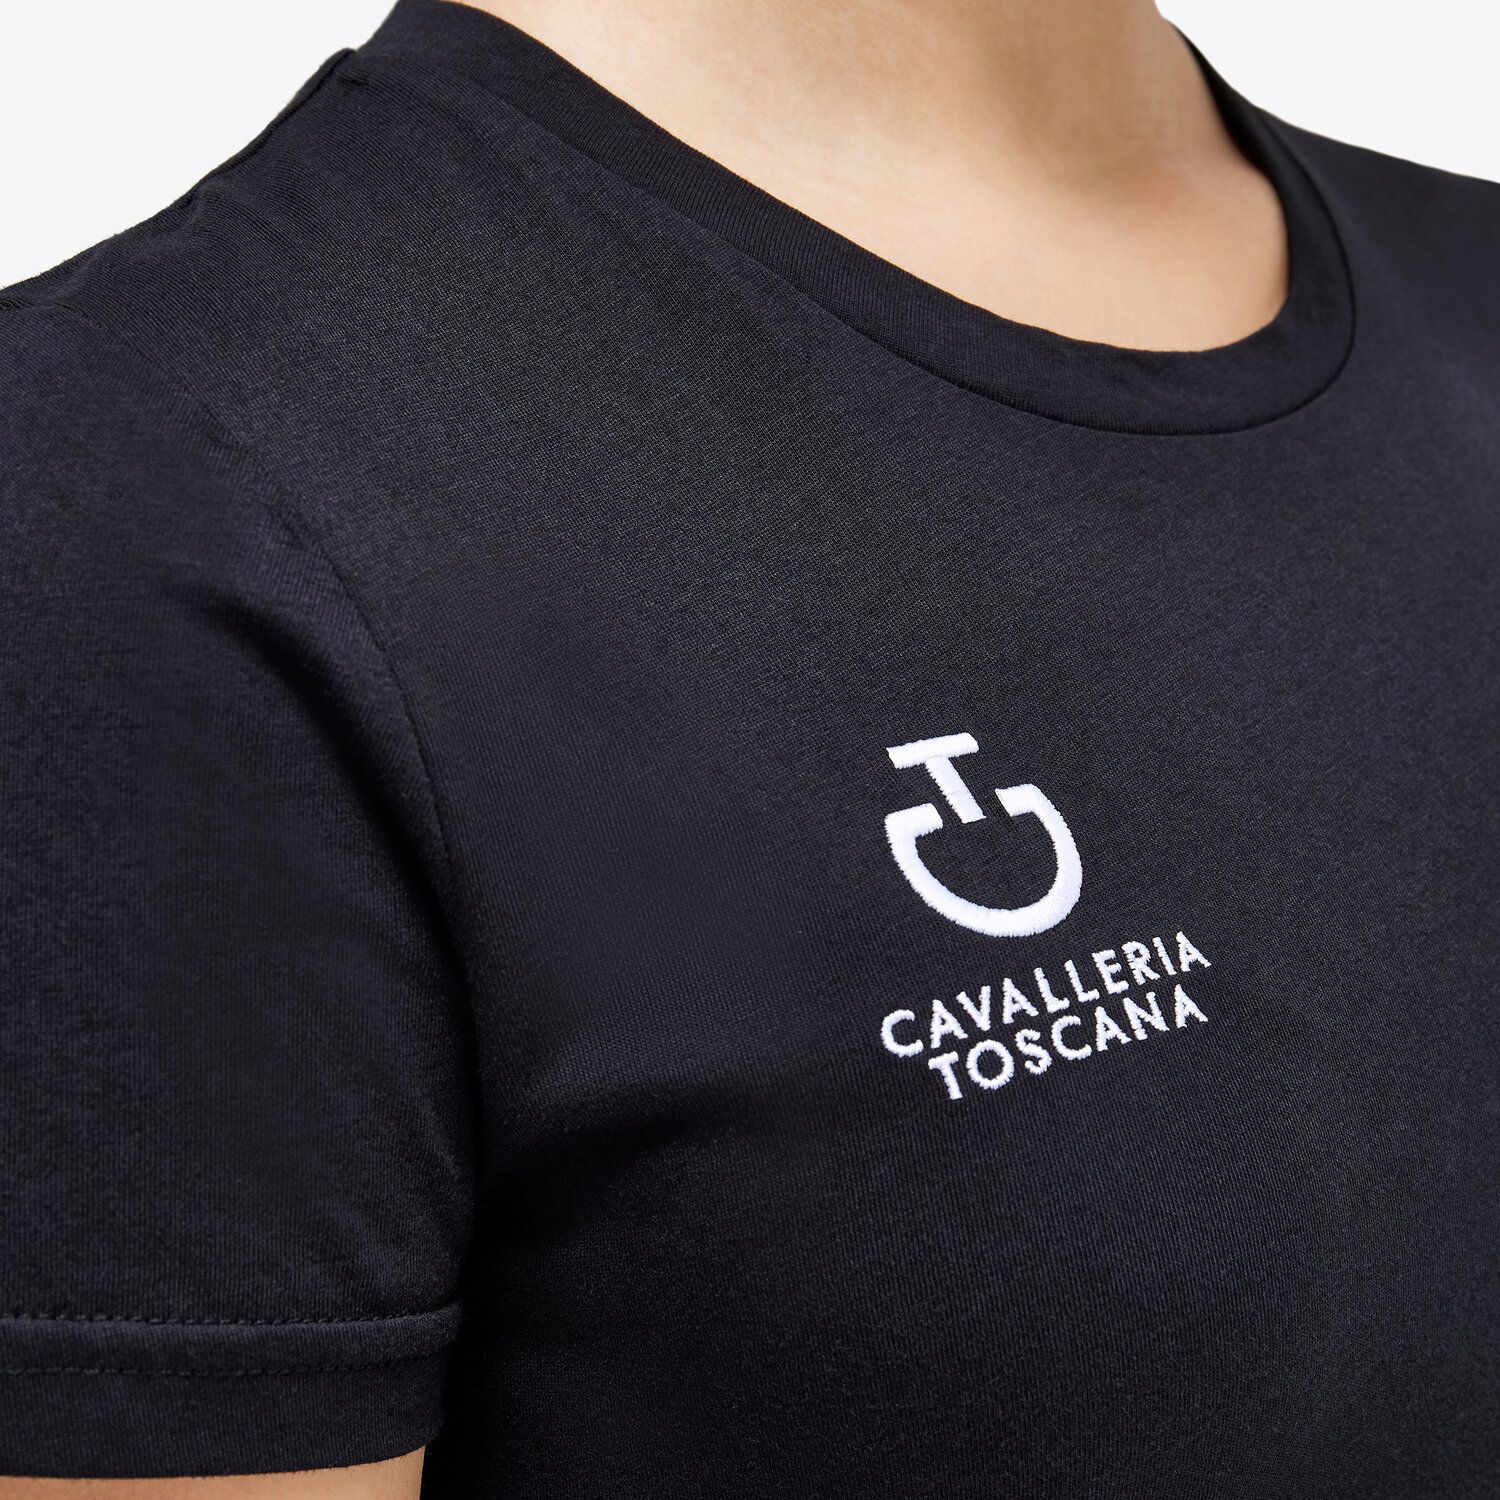 Cavalleria Toscana FISE girl t-shirt NAVY-4